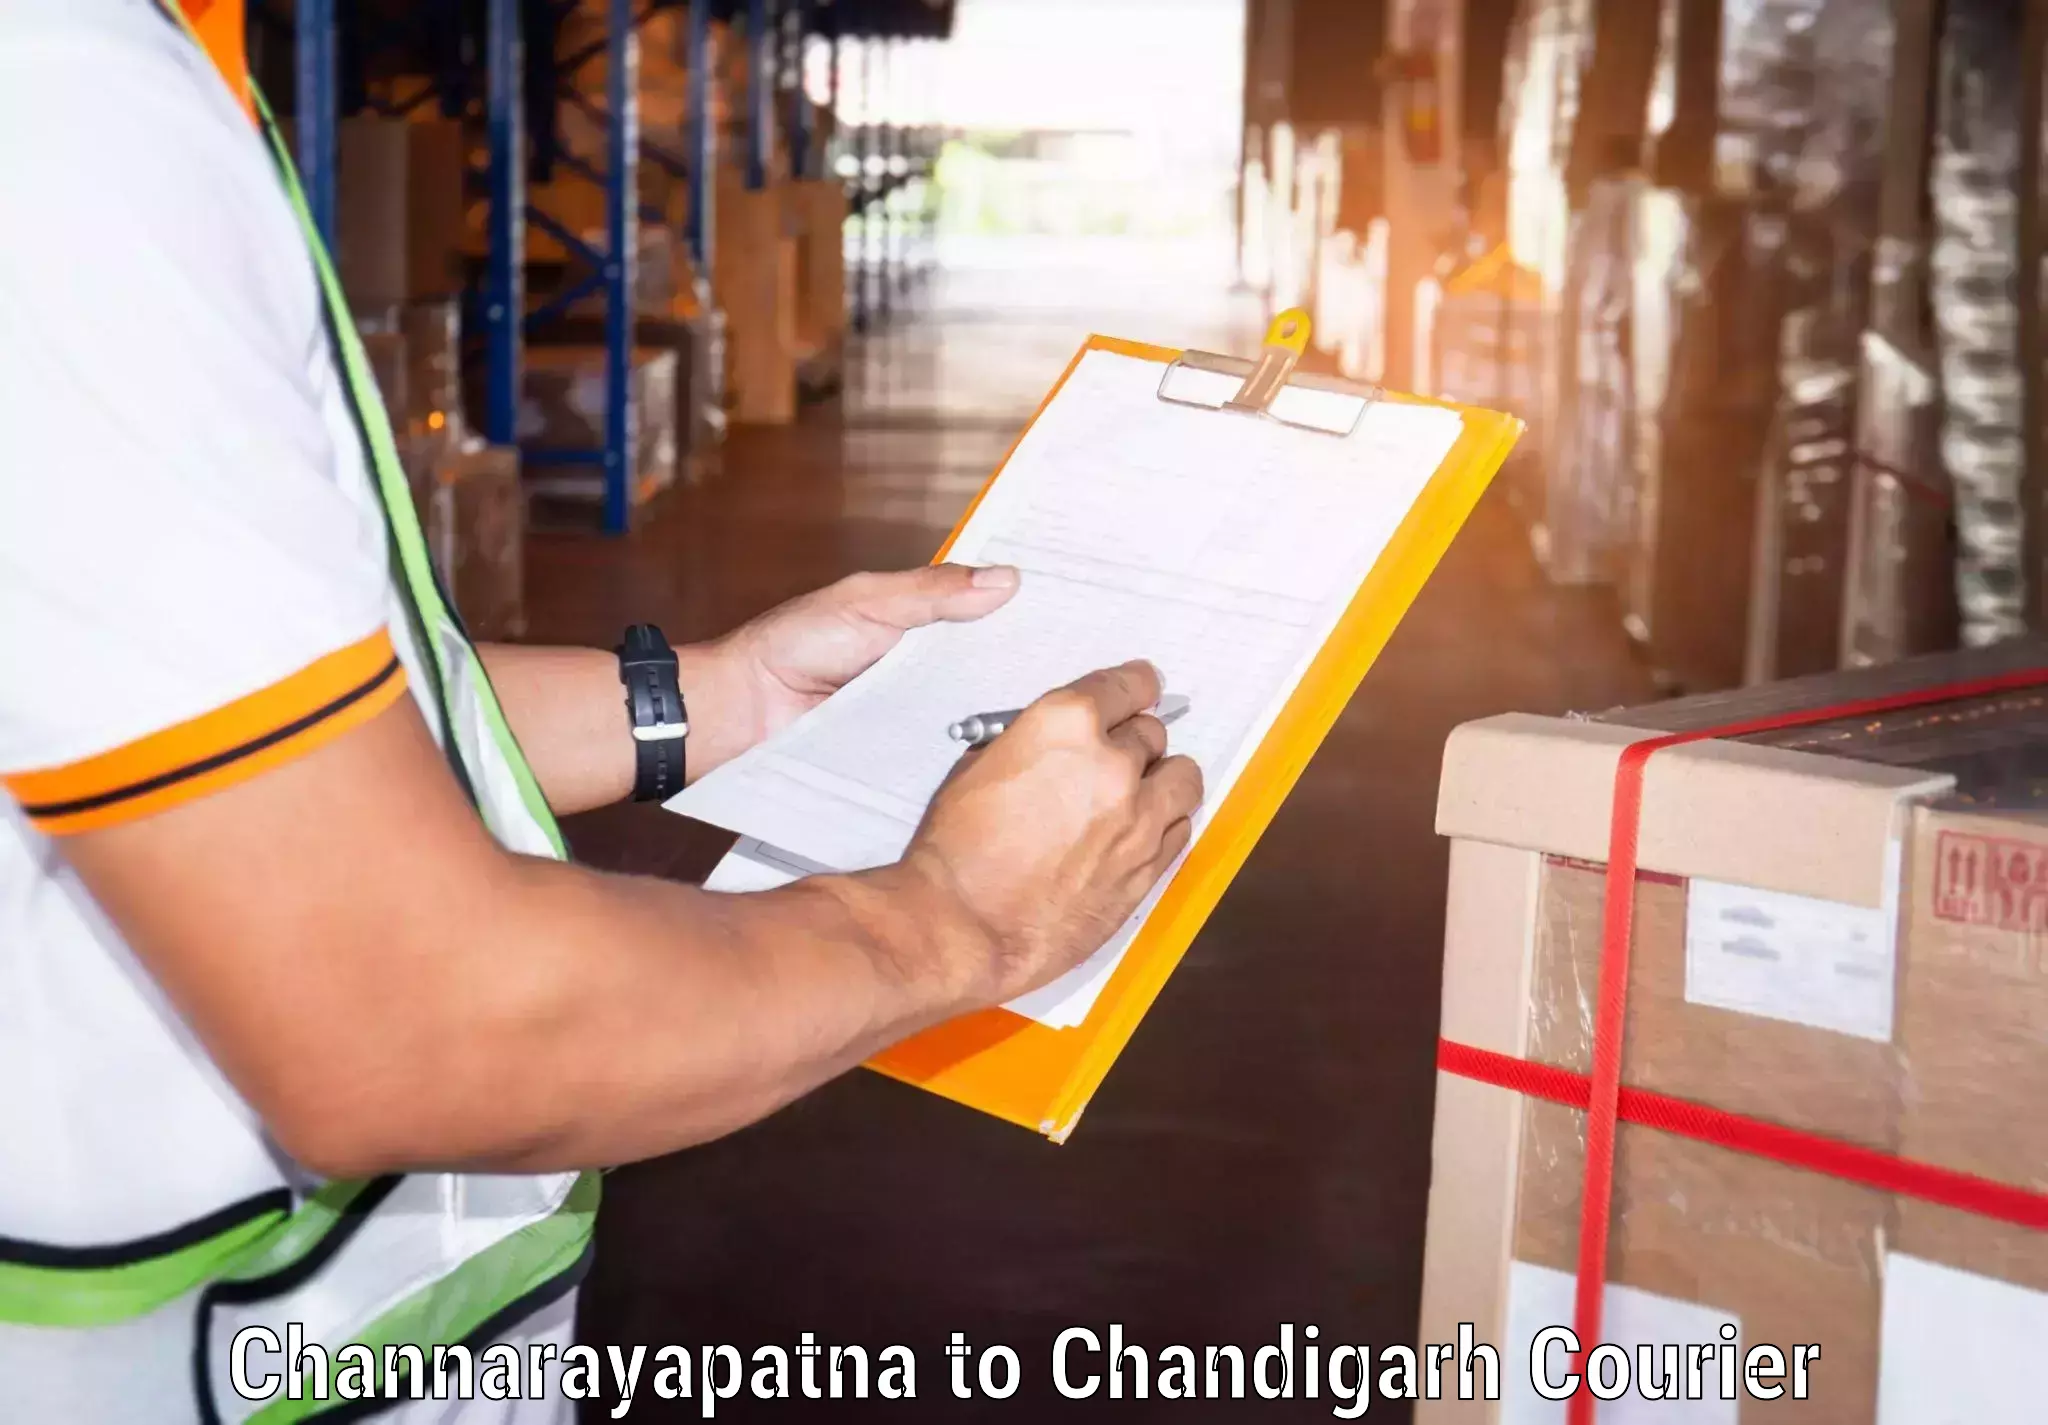 Digital courier platforms Channarayapatna to Chandigarh